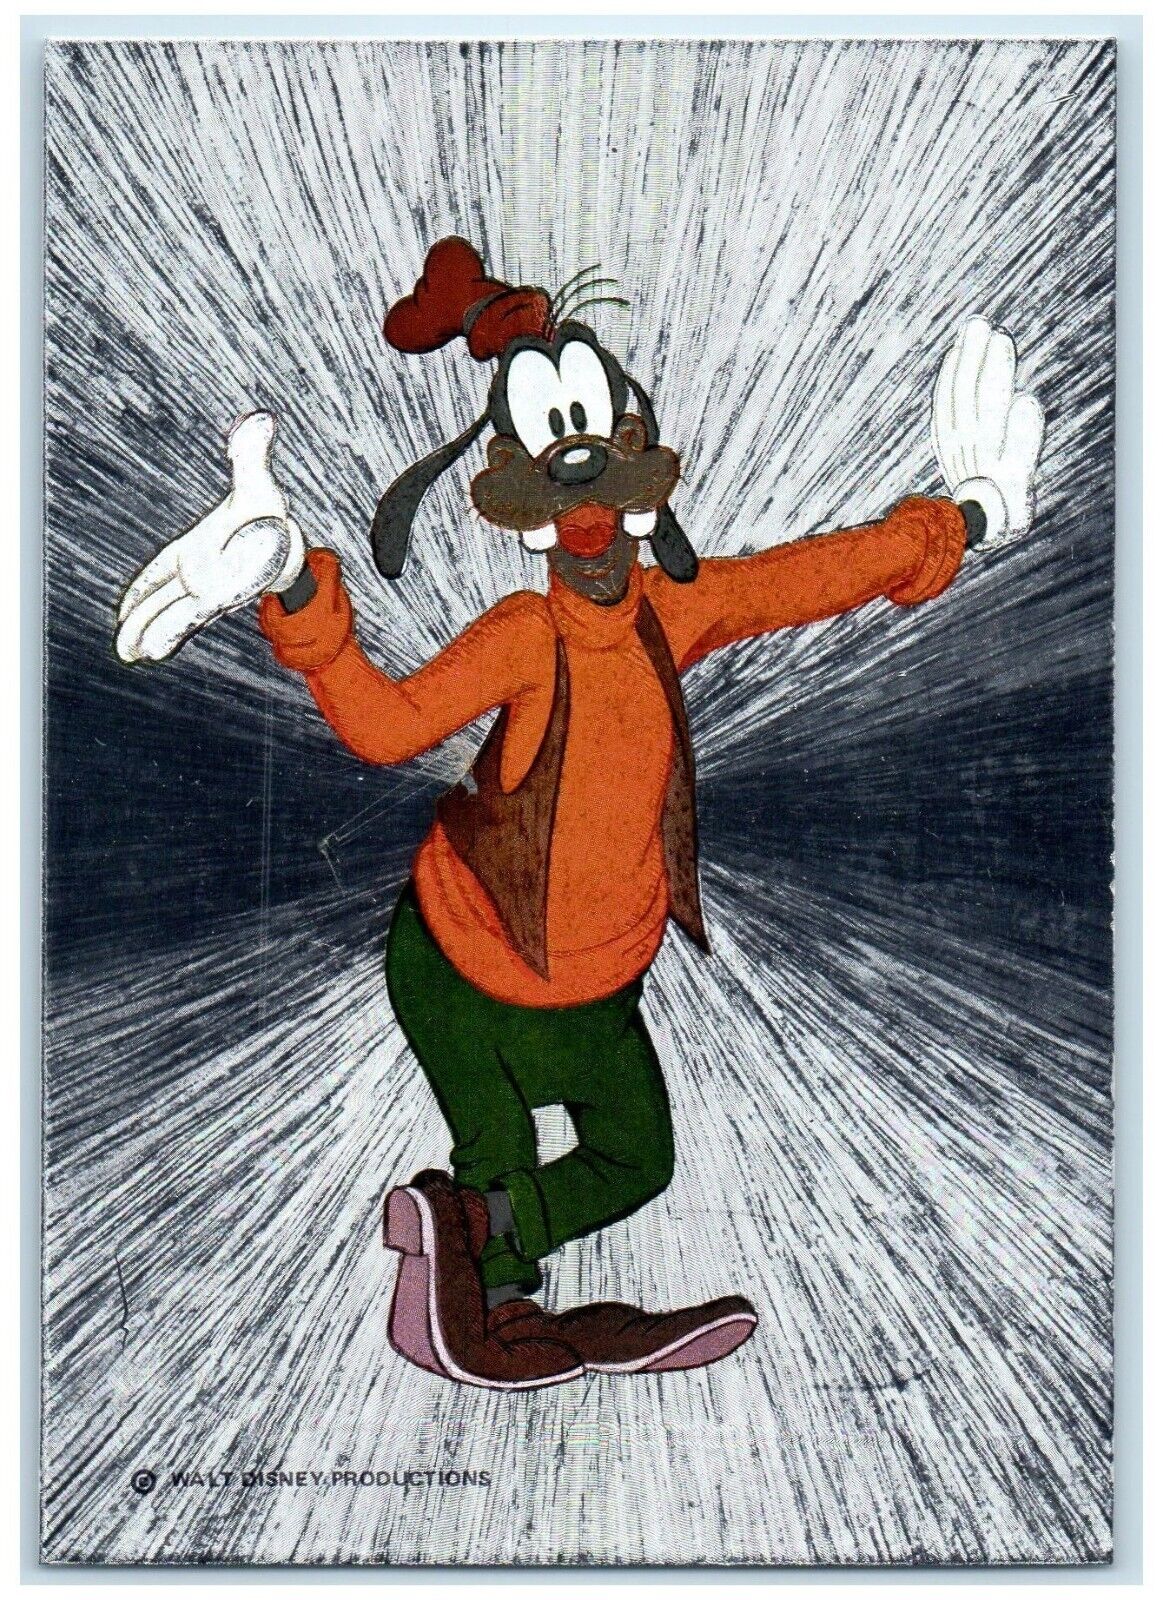 Dufex Goofy Metallic Disney Character Walt Disney Unposted Vintage Postcard